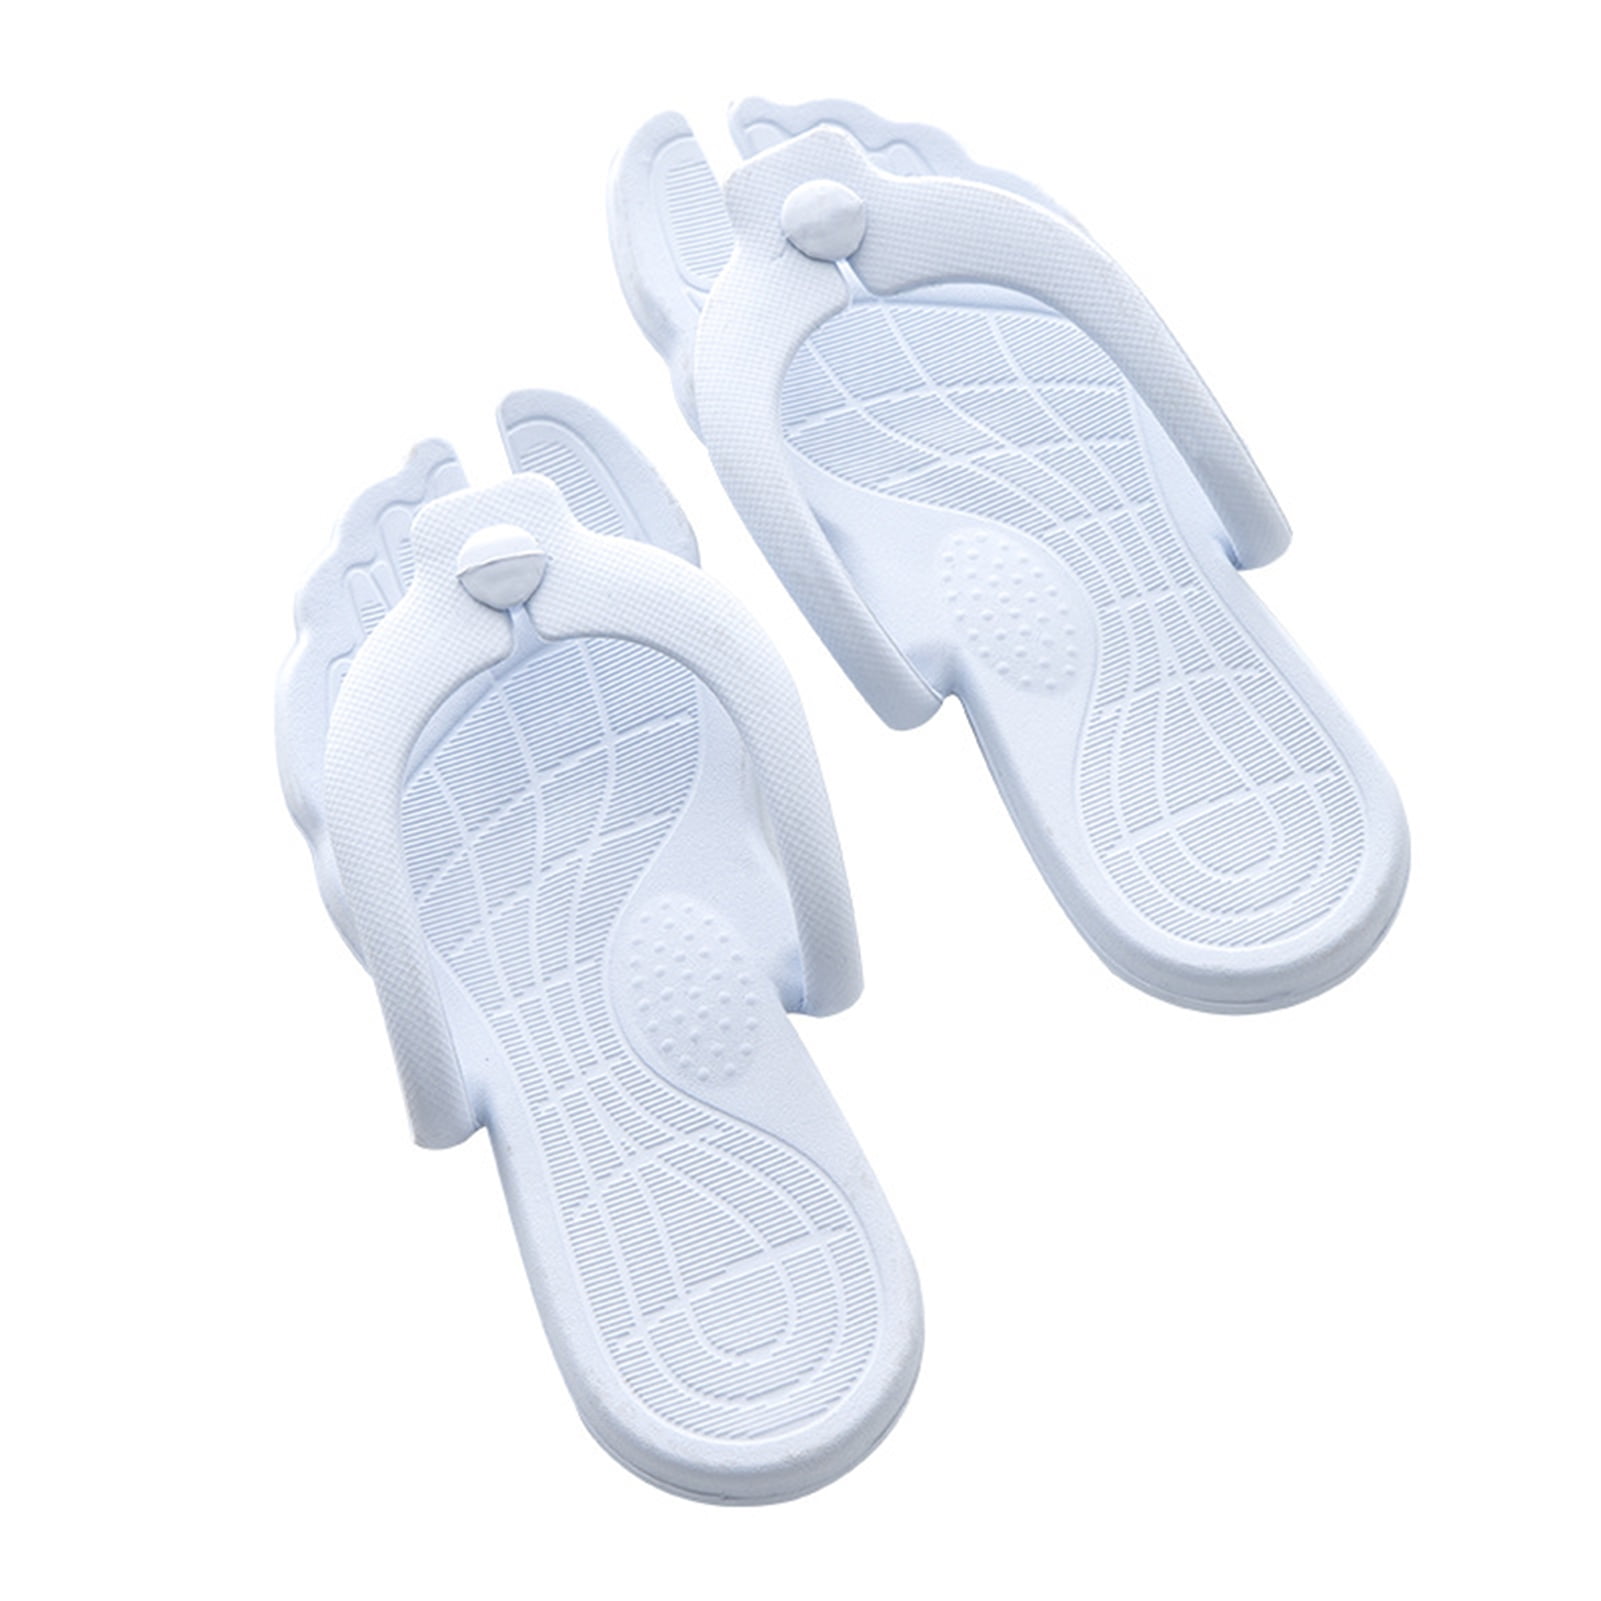 Fusipu 1 Pair Foldable Sandals Elastic EVA Anti slid Detachable Flip Flops Walking Shoes 89ceb27e 70af 4a78 a5be 576f8a131465.4b7735abf9d9f20a2b82c0d5e88d1336